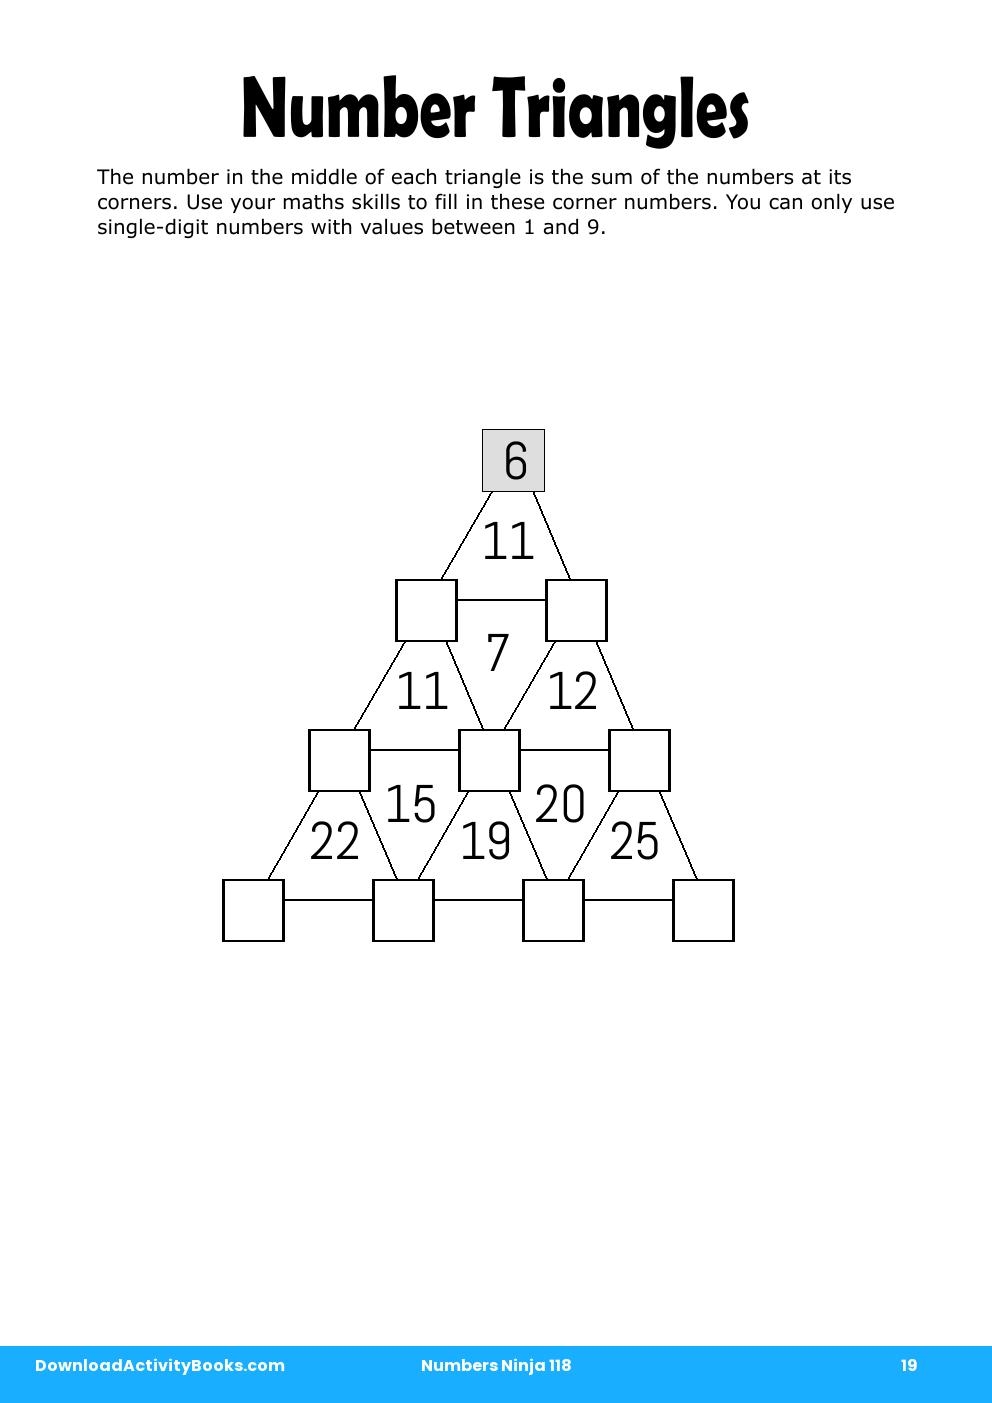 Number Triangles in Numbers Ninja 118